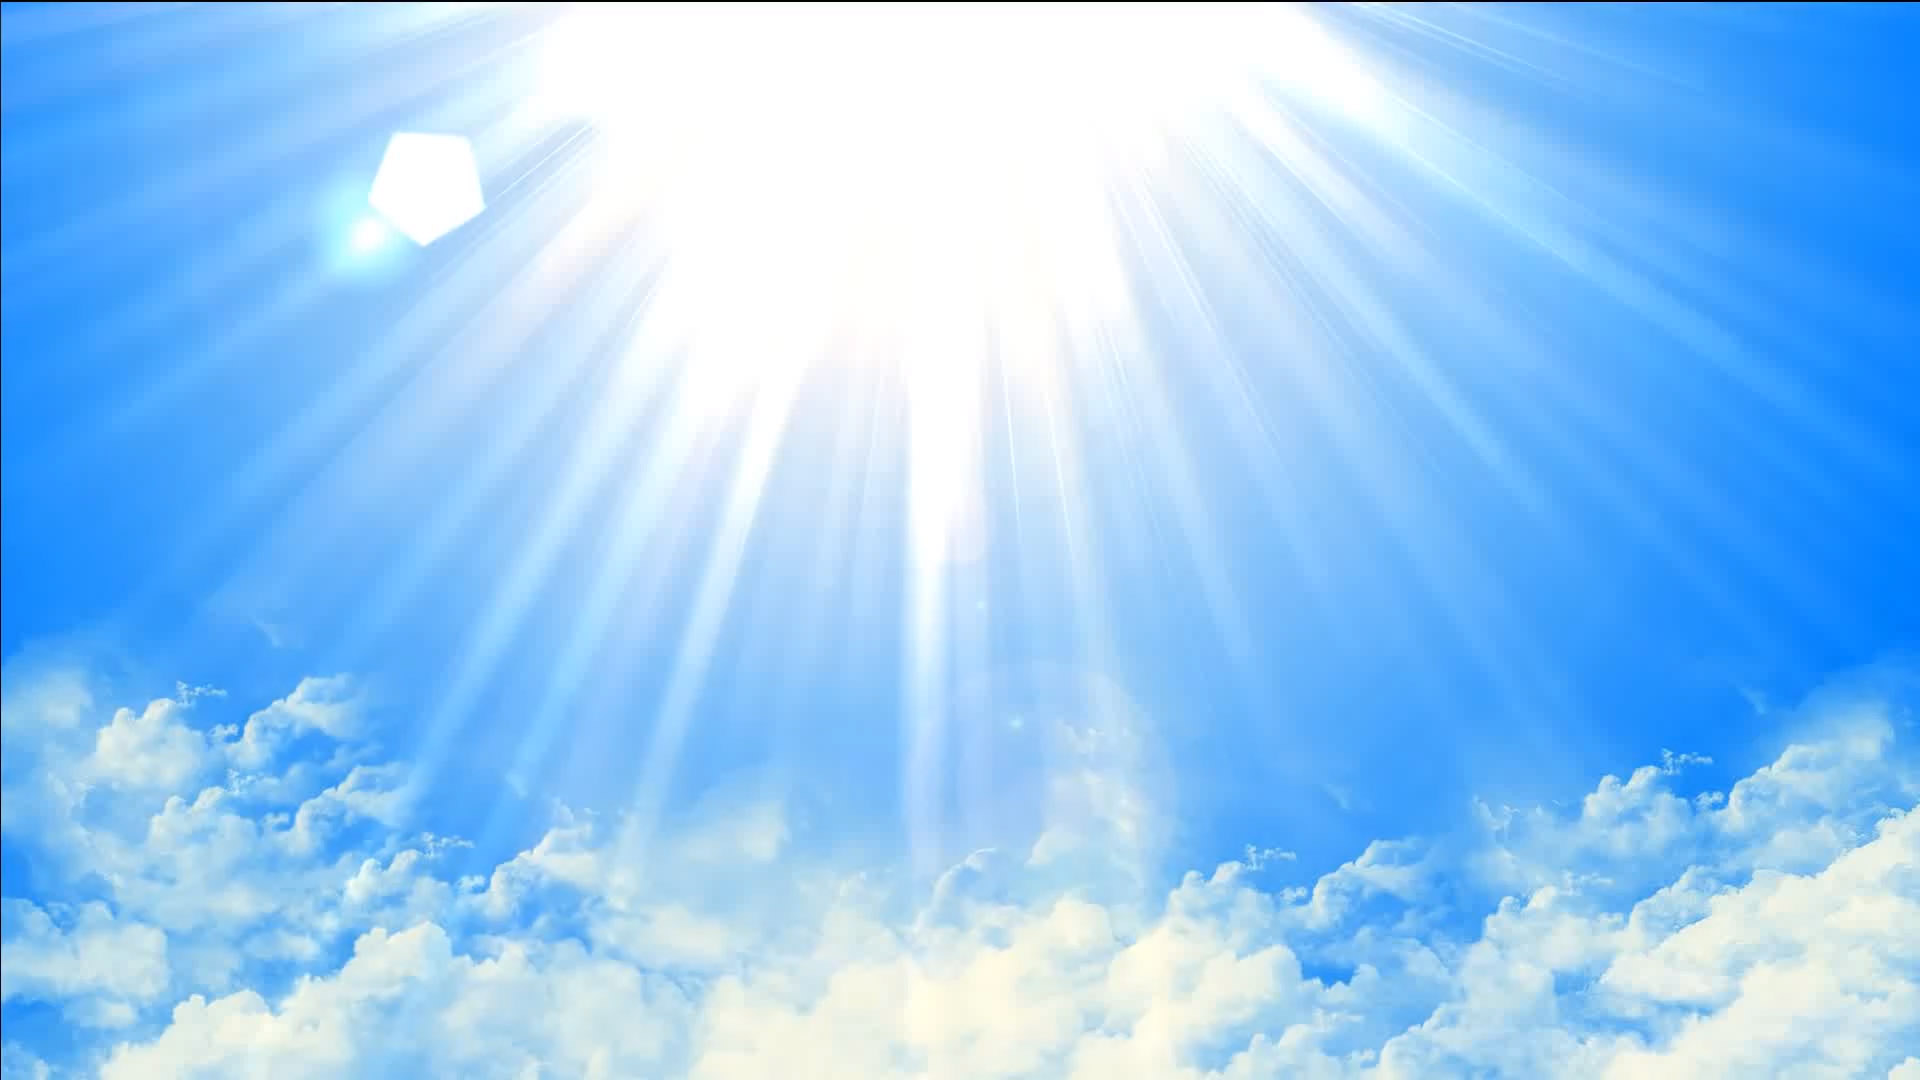 Purchase Animated Sun Shining Light on blue sky background.